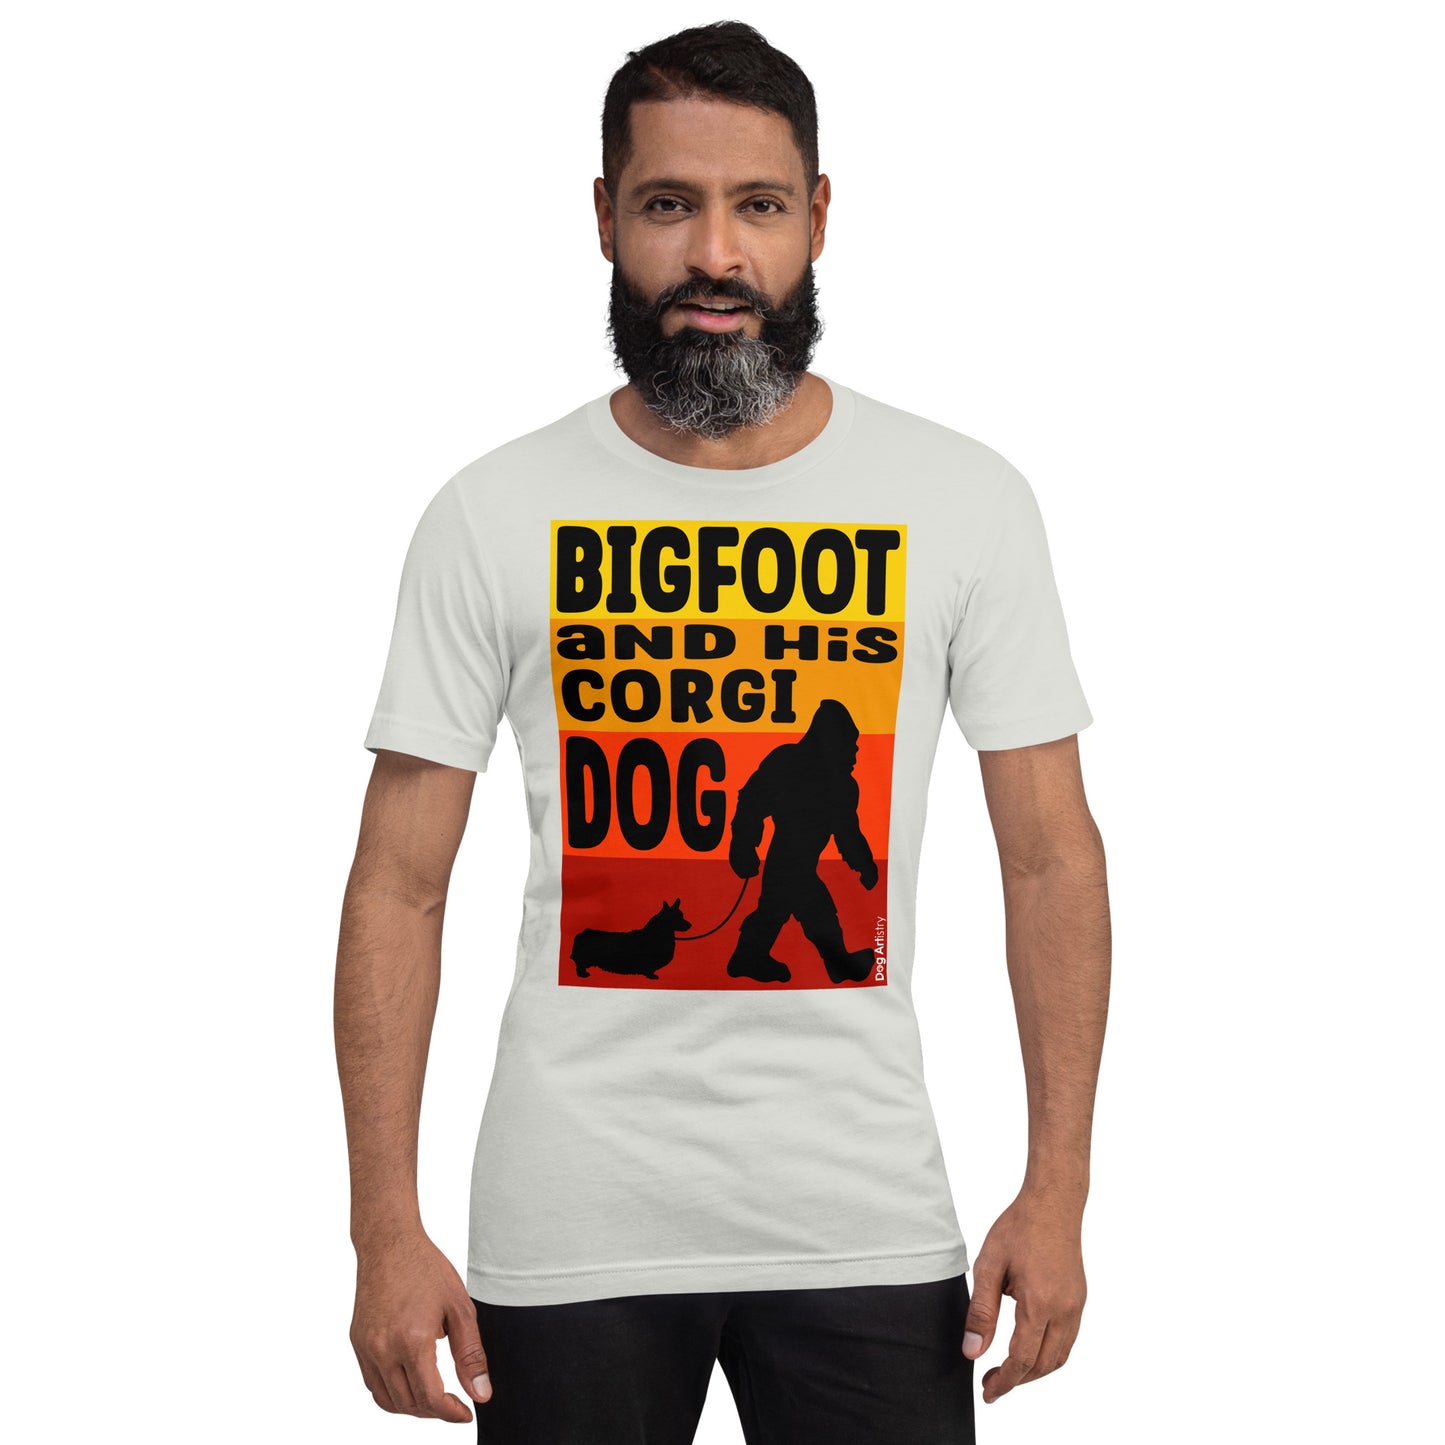 Big foot and his Corgi dog unisex silver t-shirt by Dog Artistry.